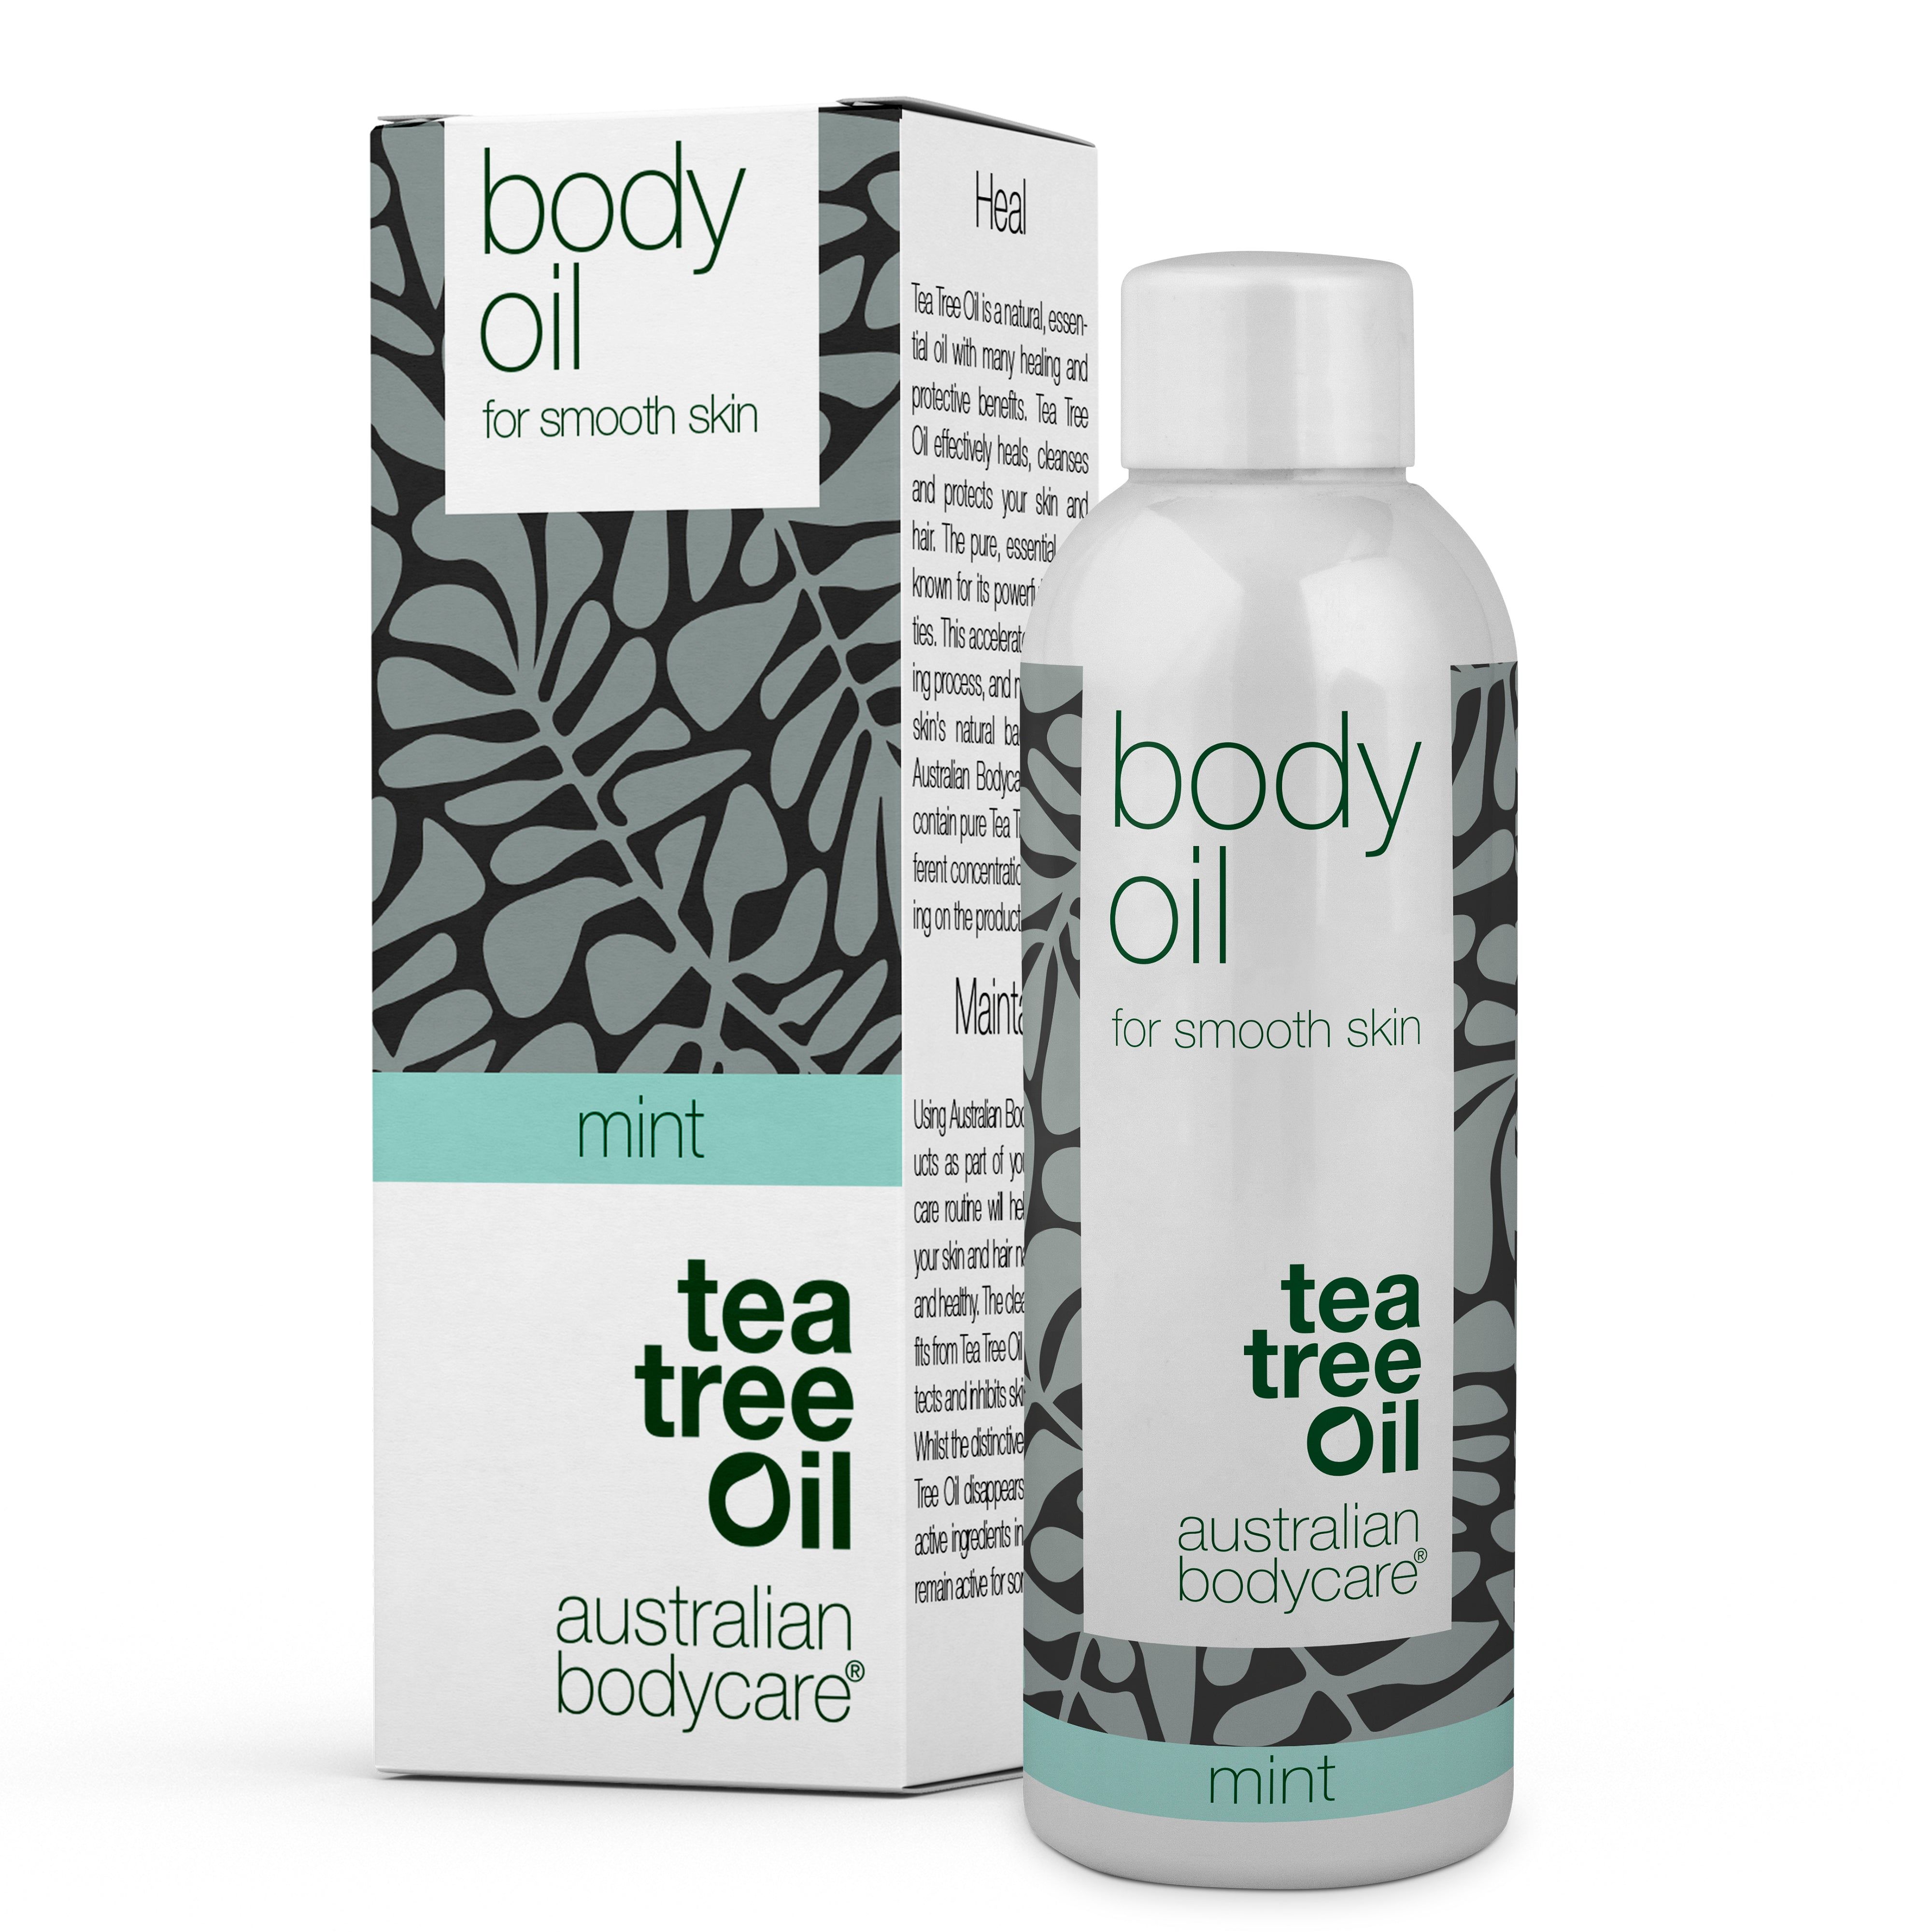 Australian Bodycare Dehnungsstreifen Öl mit Teebaumöl